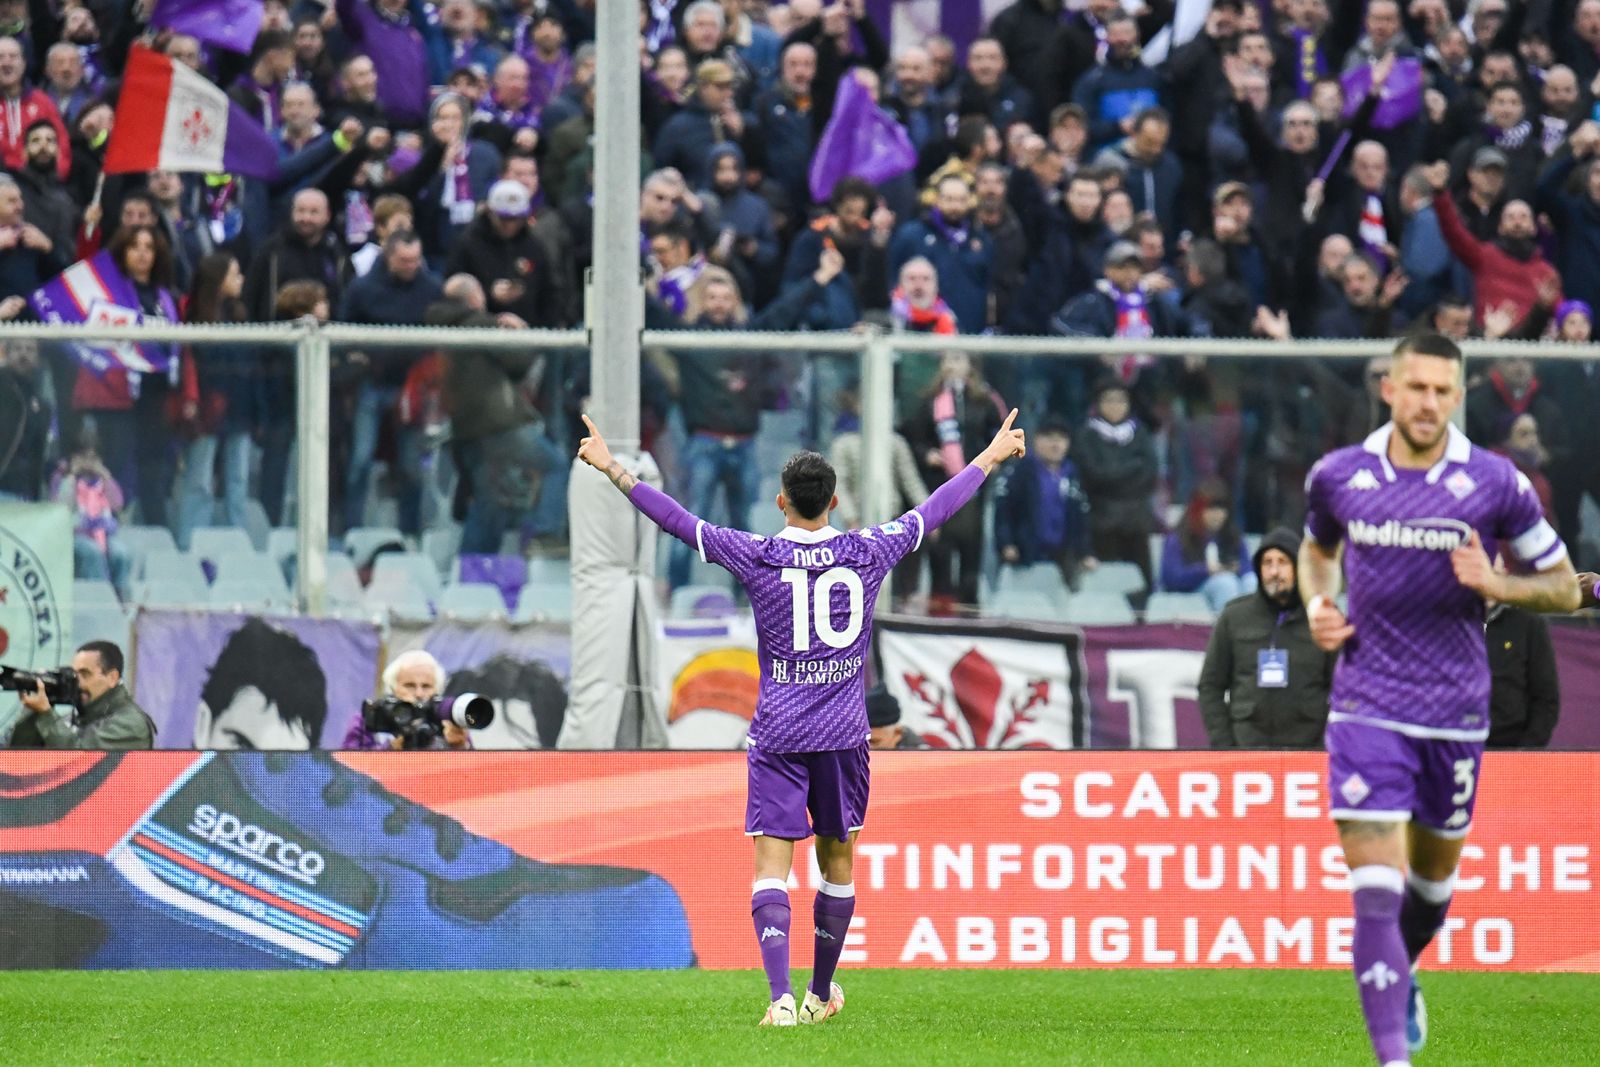 Conference League, Cukaricki-Fiorentina 0-1: decide Nzola